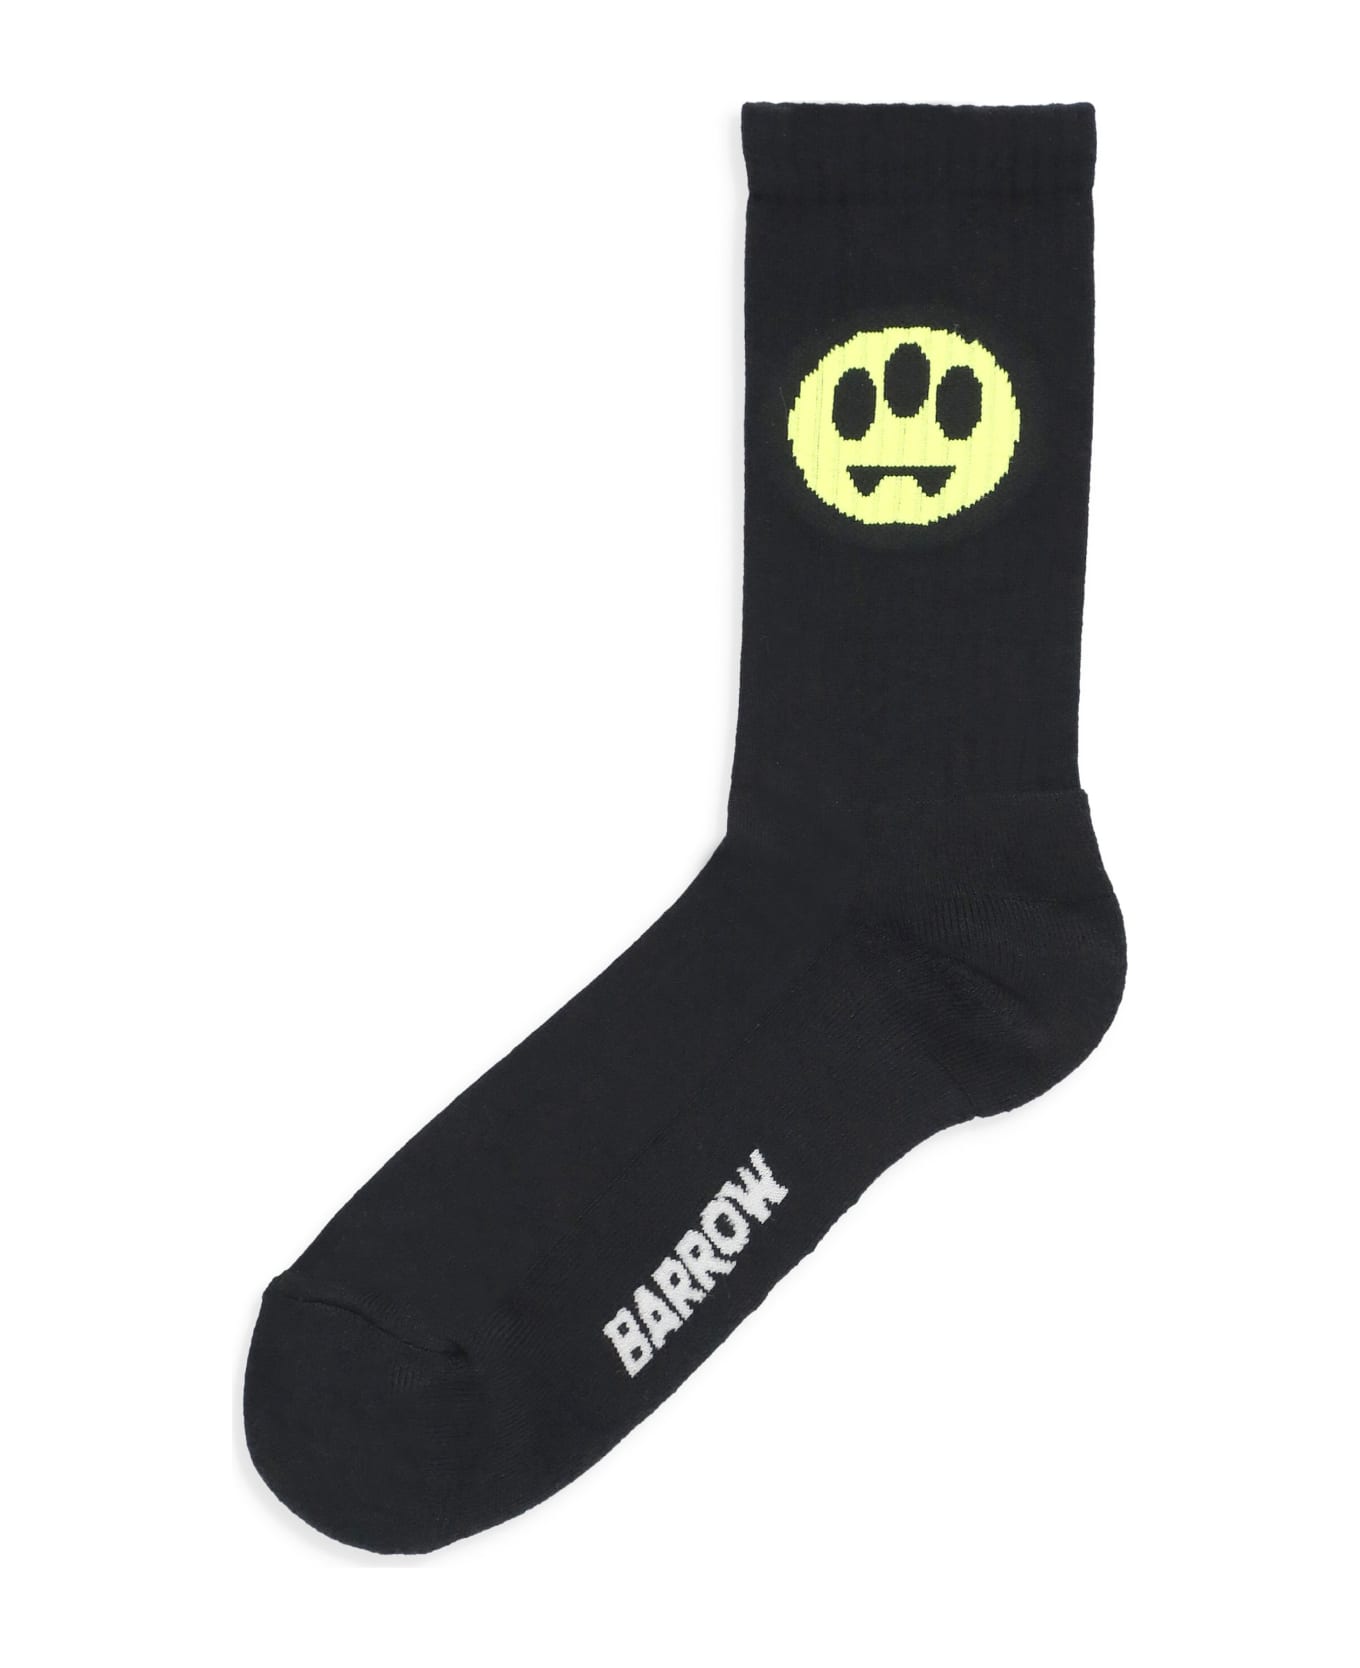 Barrow Iconic Socks - Black